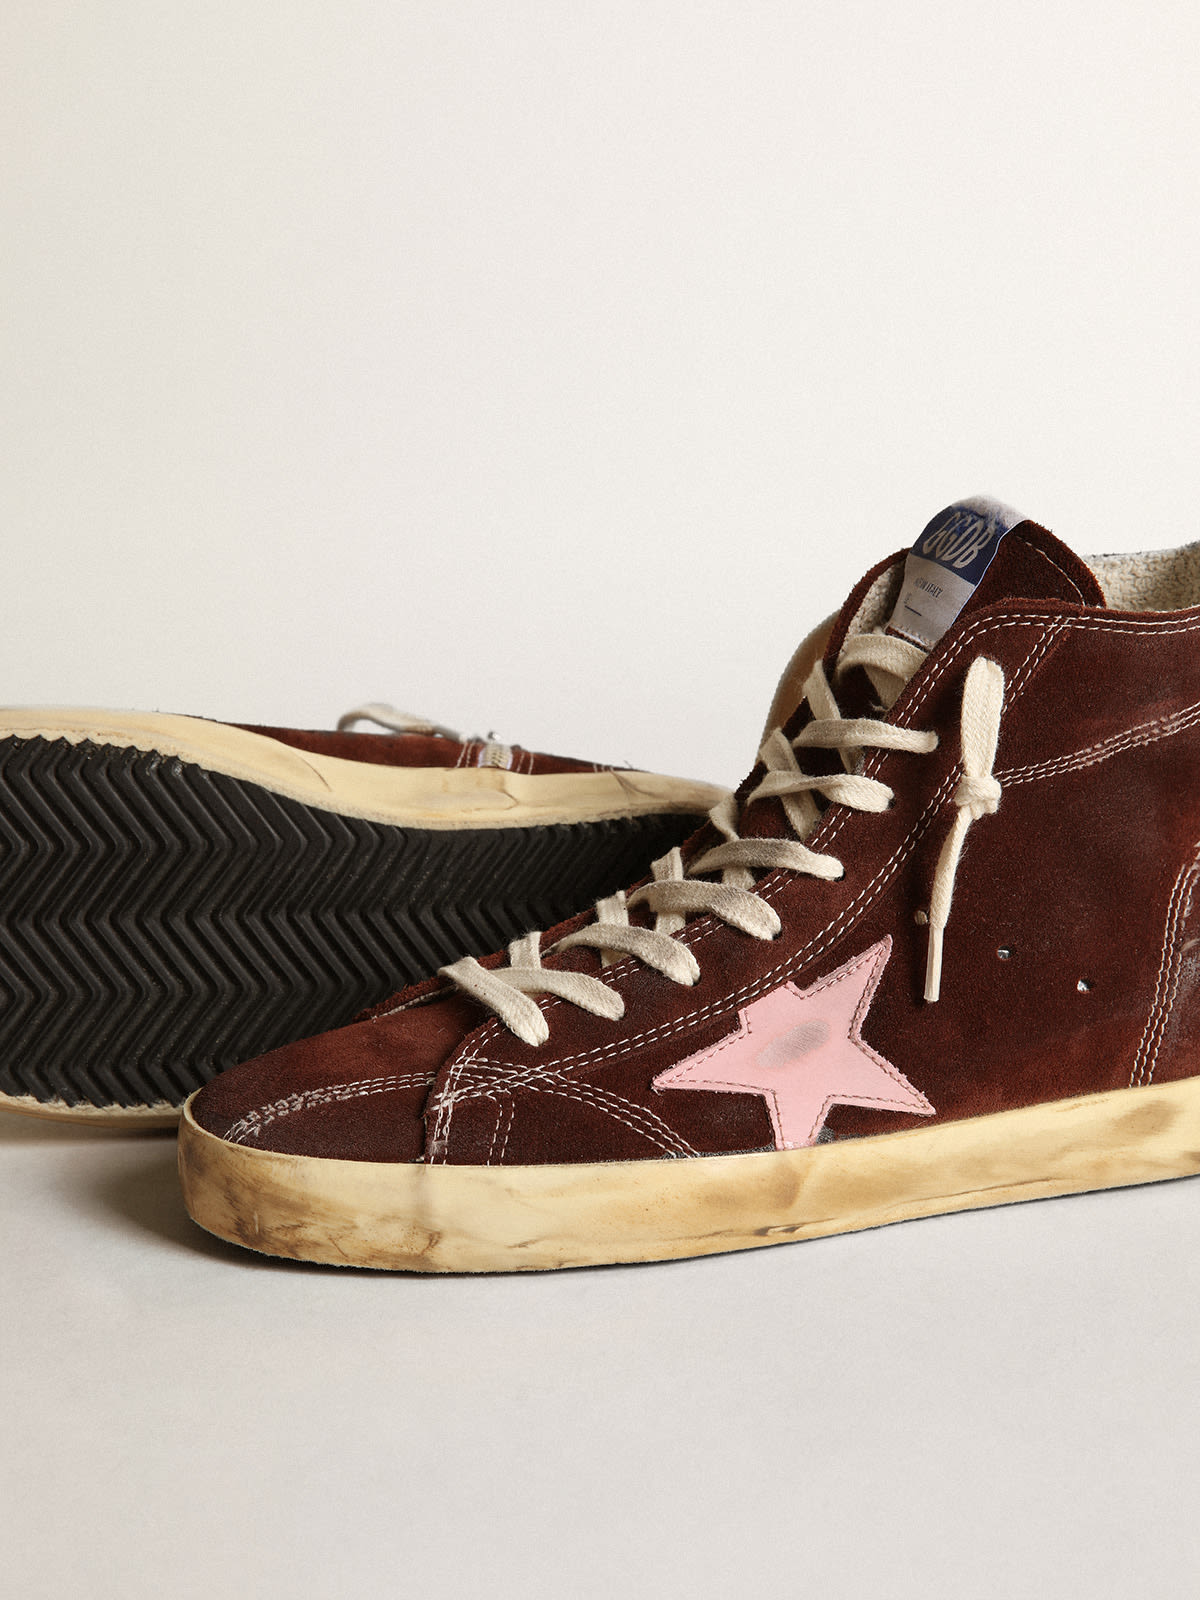 Golden Goose - Sneaker Francy in suede marrone con stella in pelle rosa e talloncino in nappa nera in 